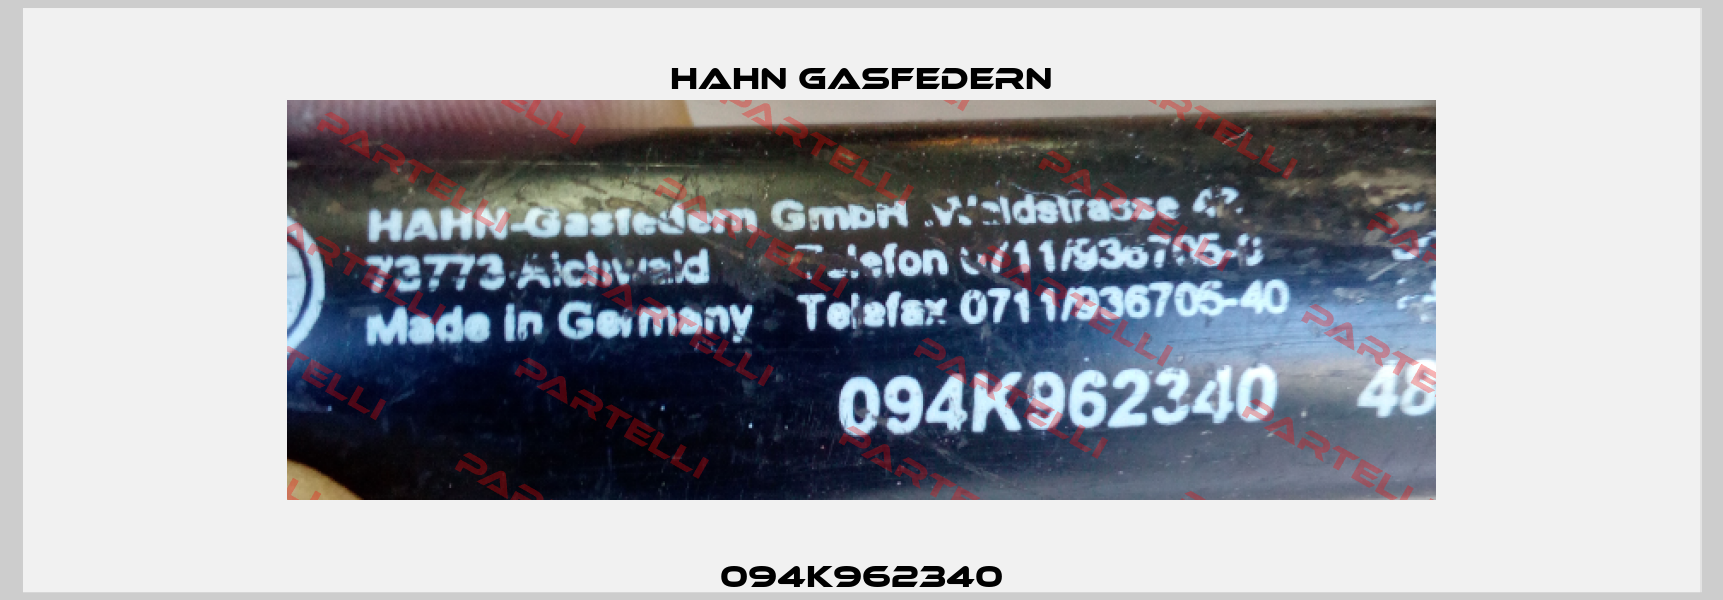 094k962340 Hahn Gasfedern